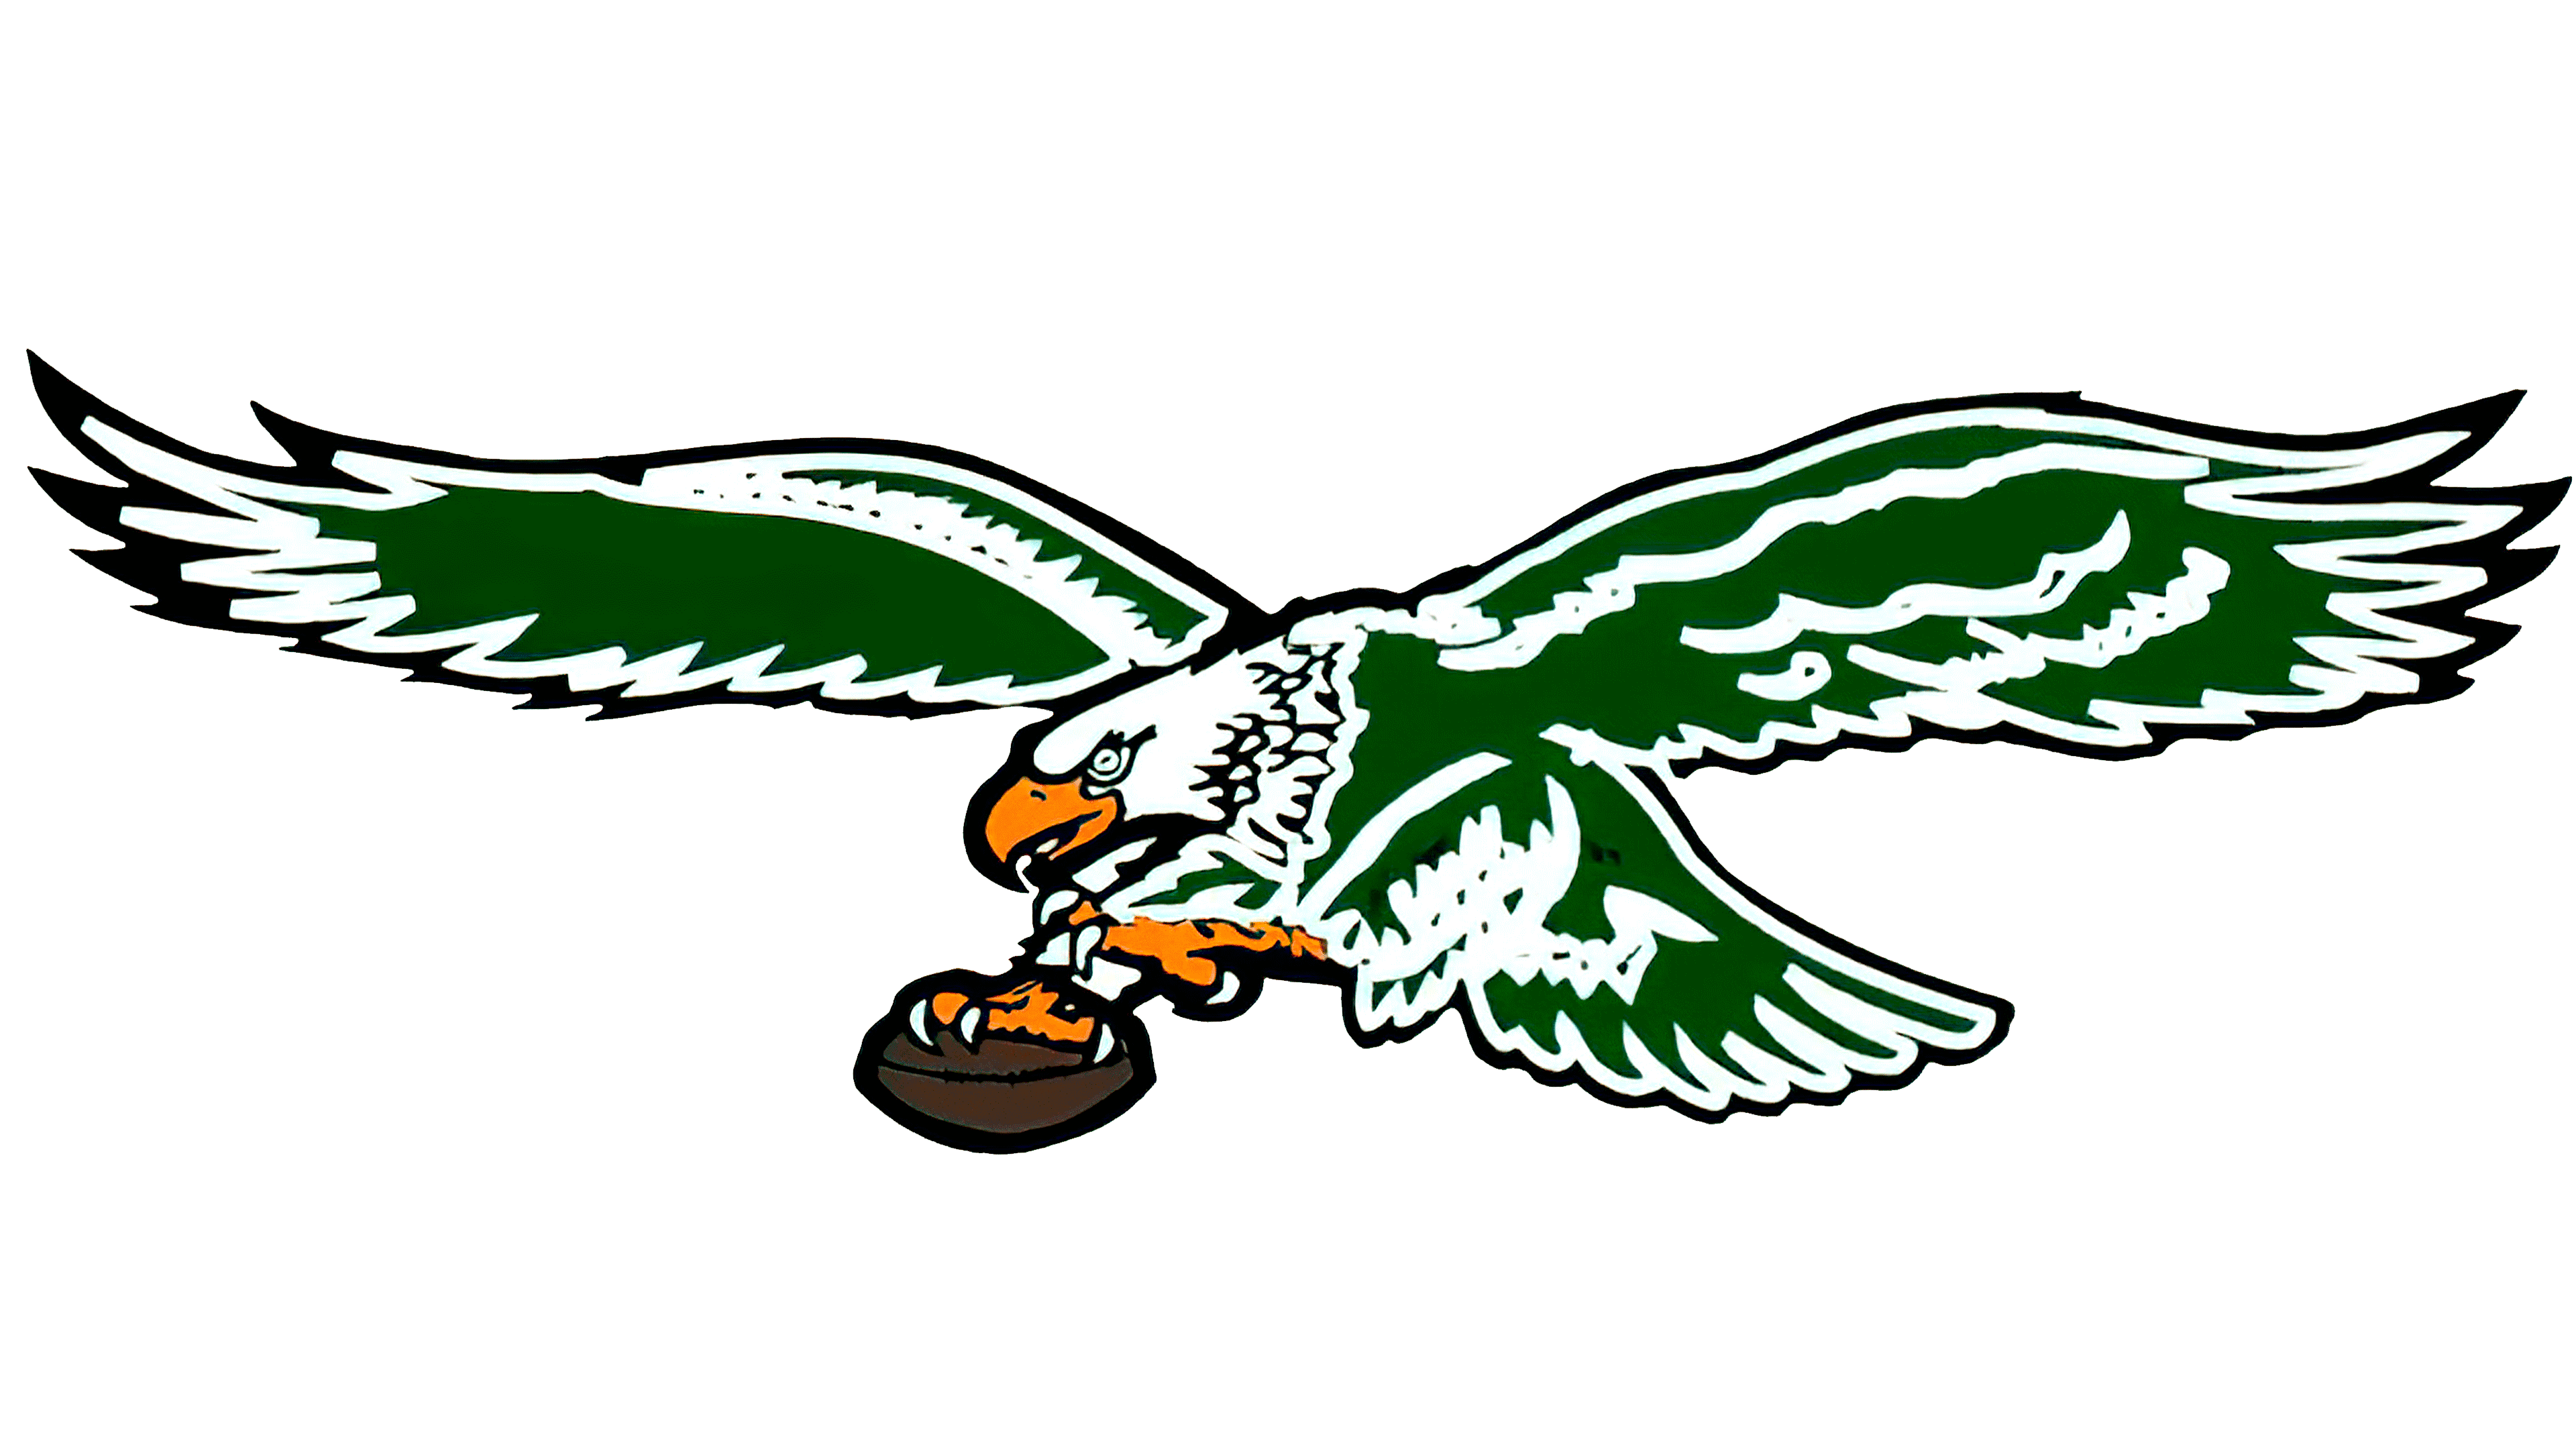 Philadelphia Eagles Logo, PNG, Symbol, History, Meaning